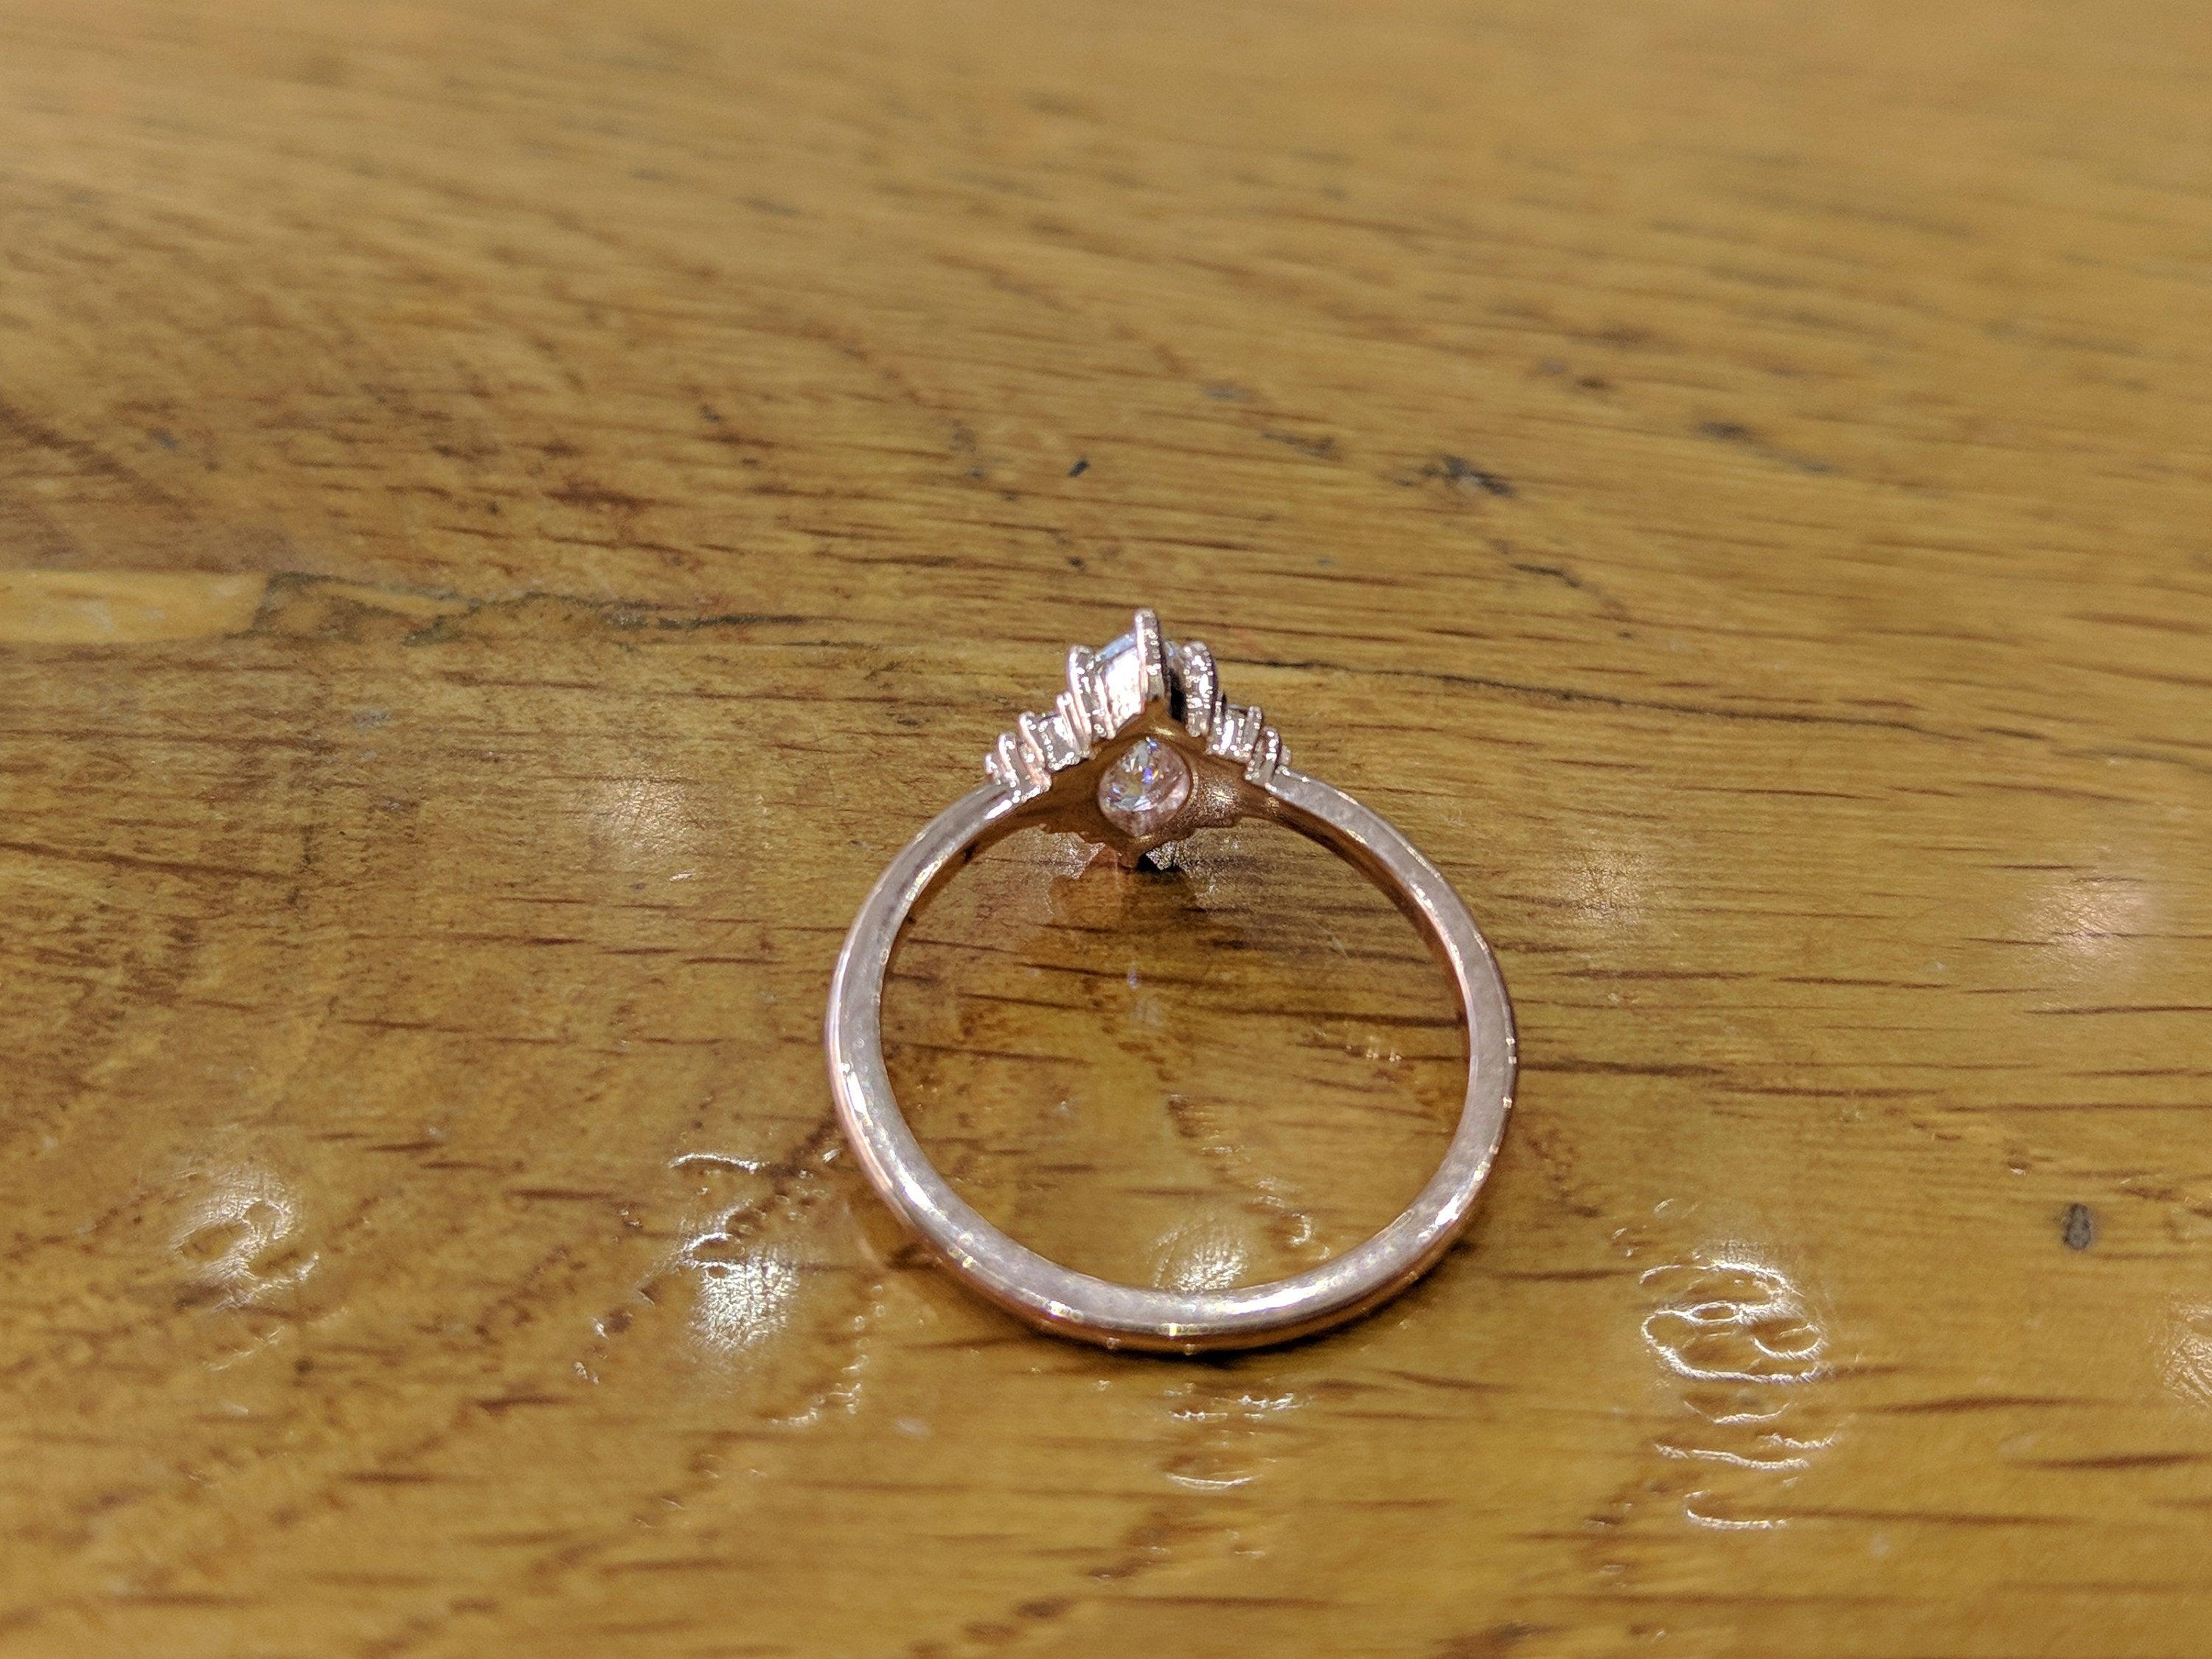 1/2 carat marquise diamond ring